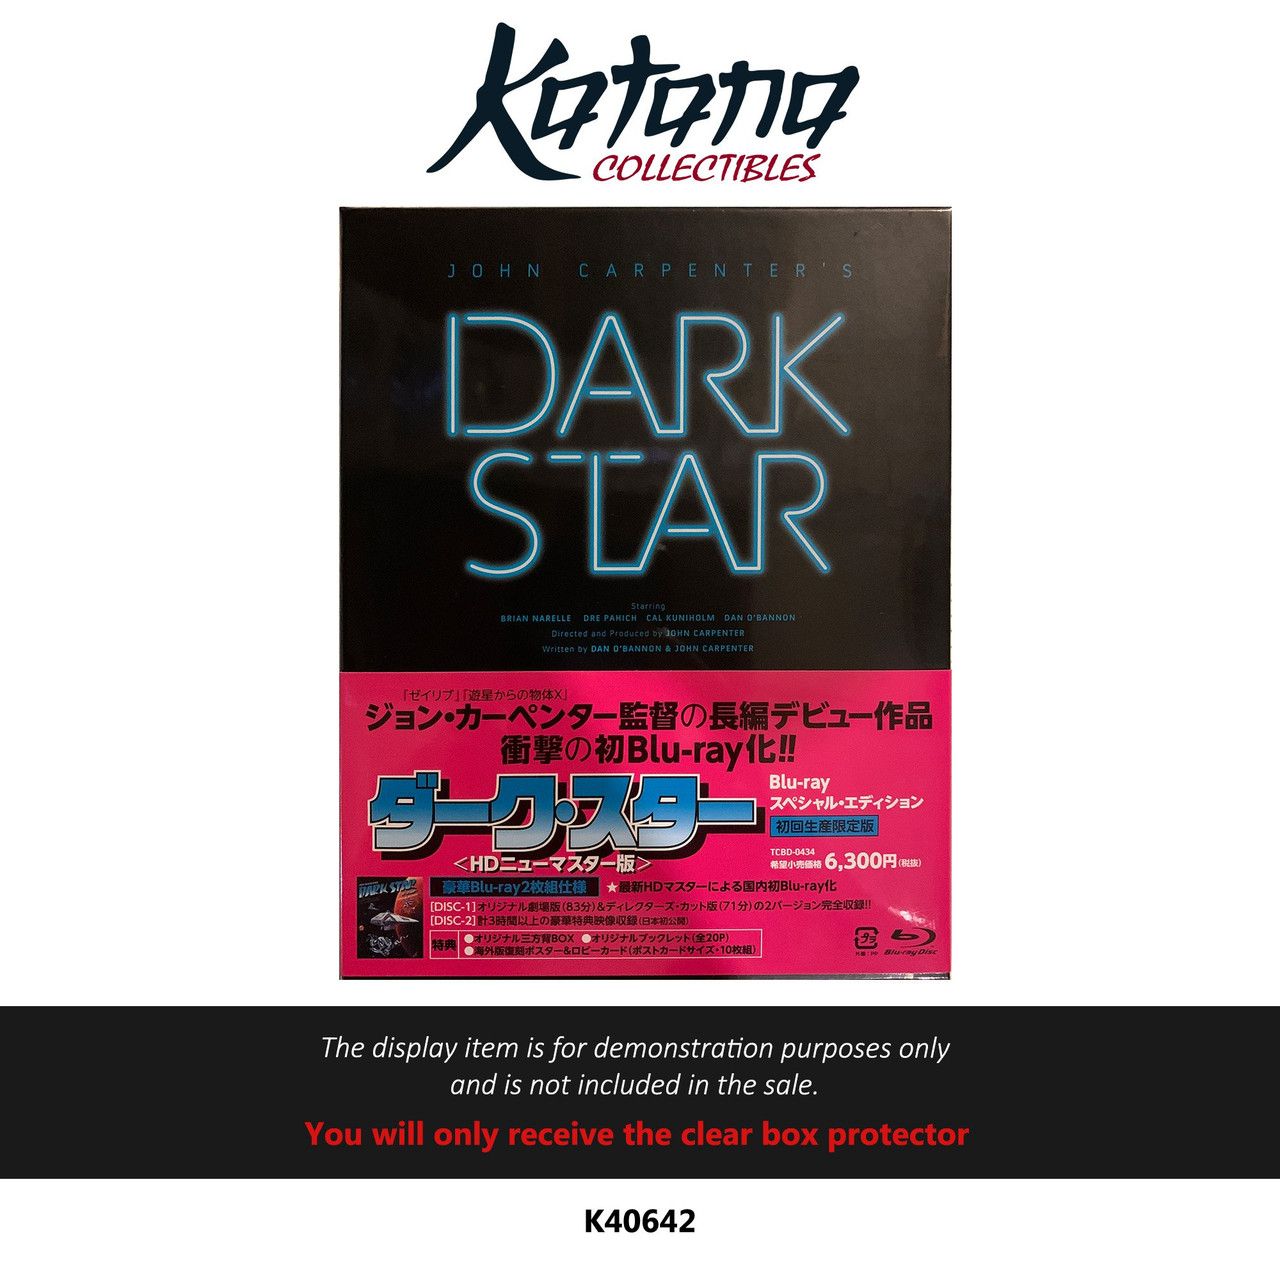 Katana Collectibles Protector For Dark Star Blu-Ray